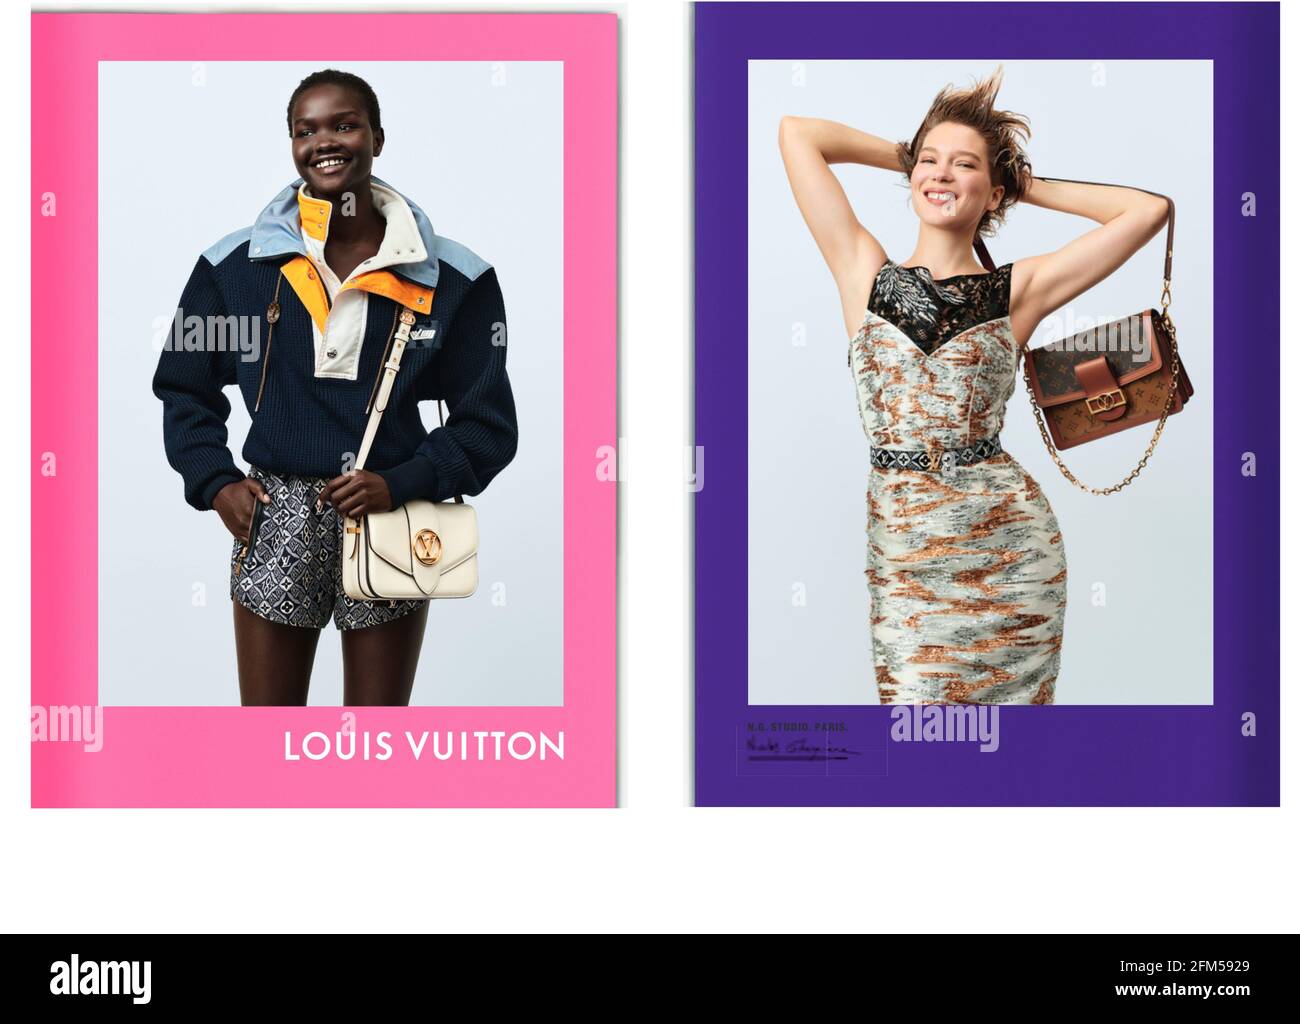 Louis Vuitton Advertisement 2020